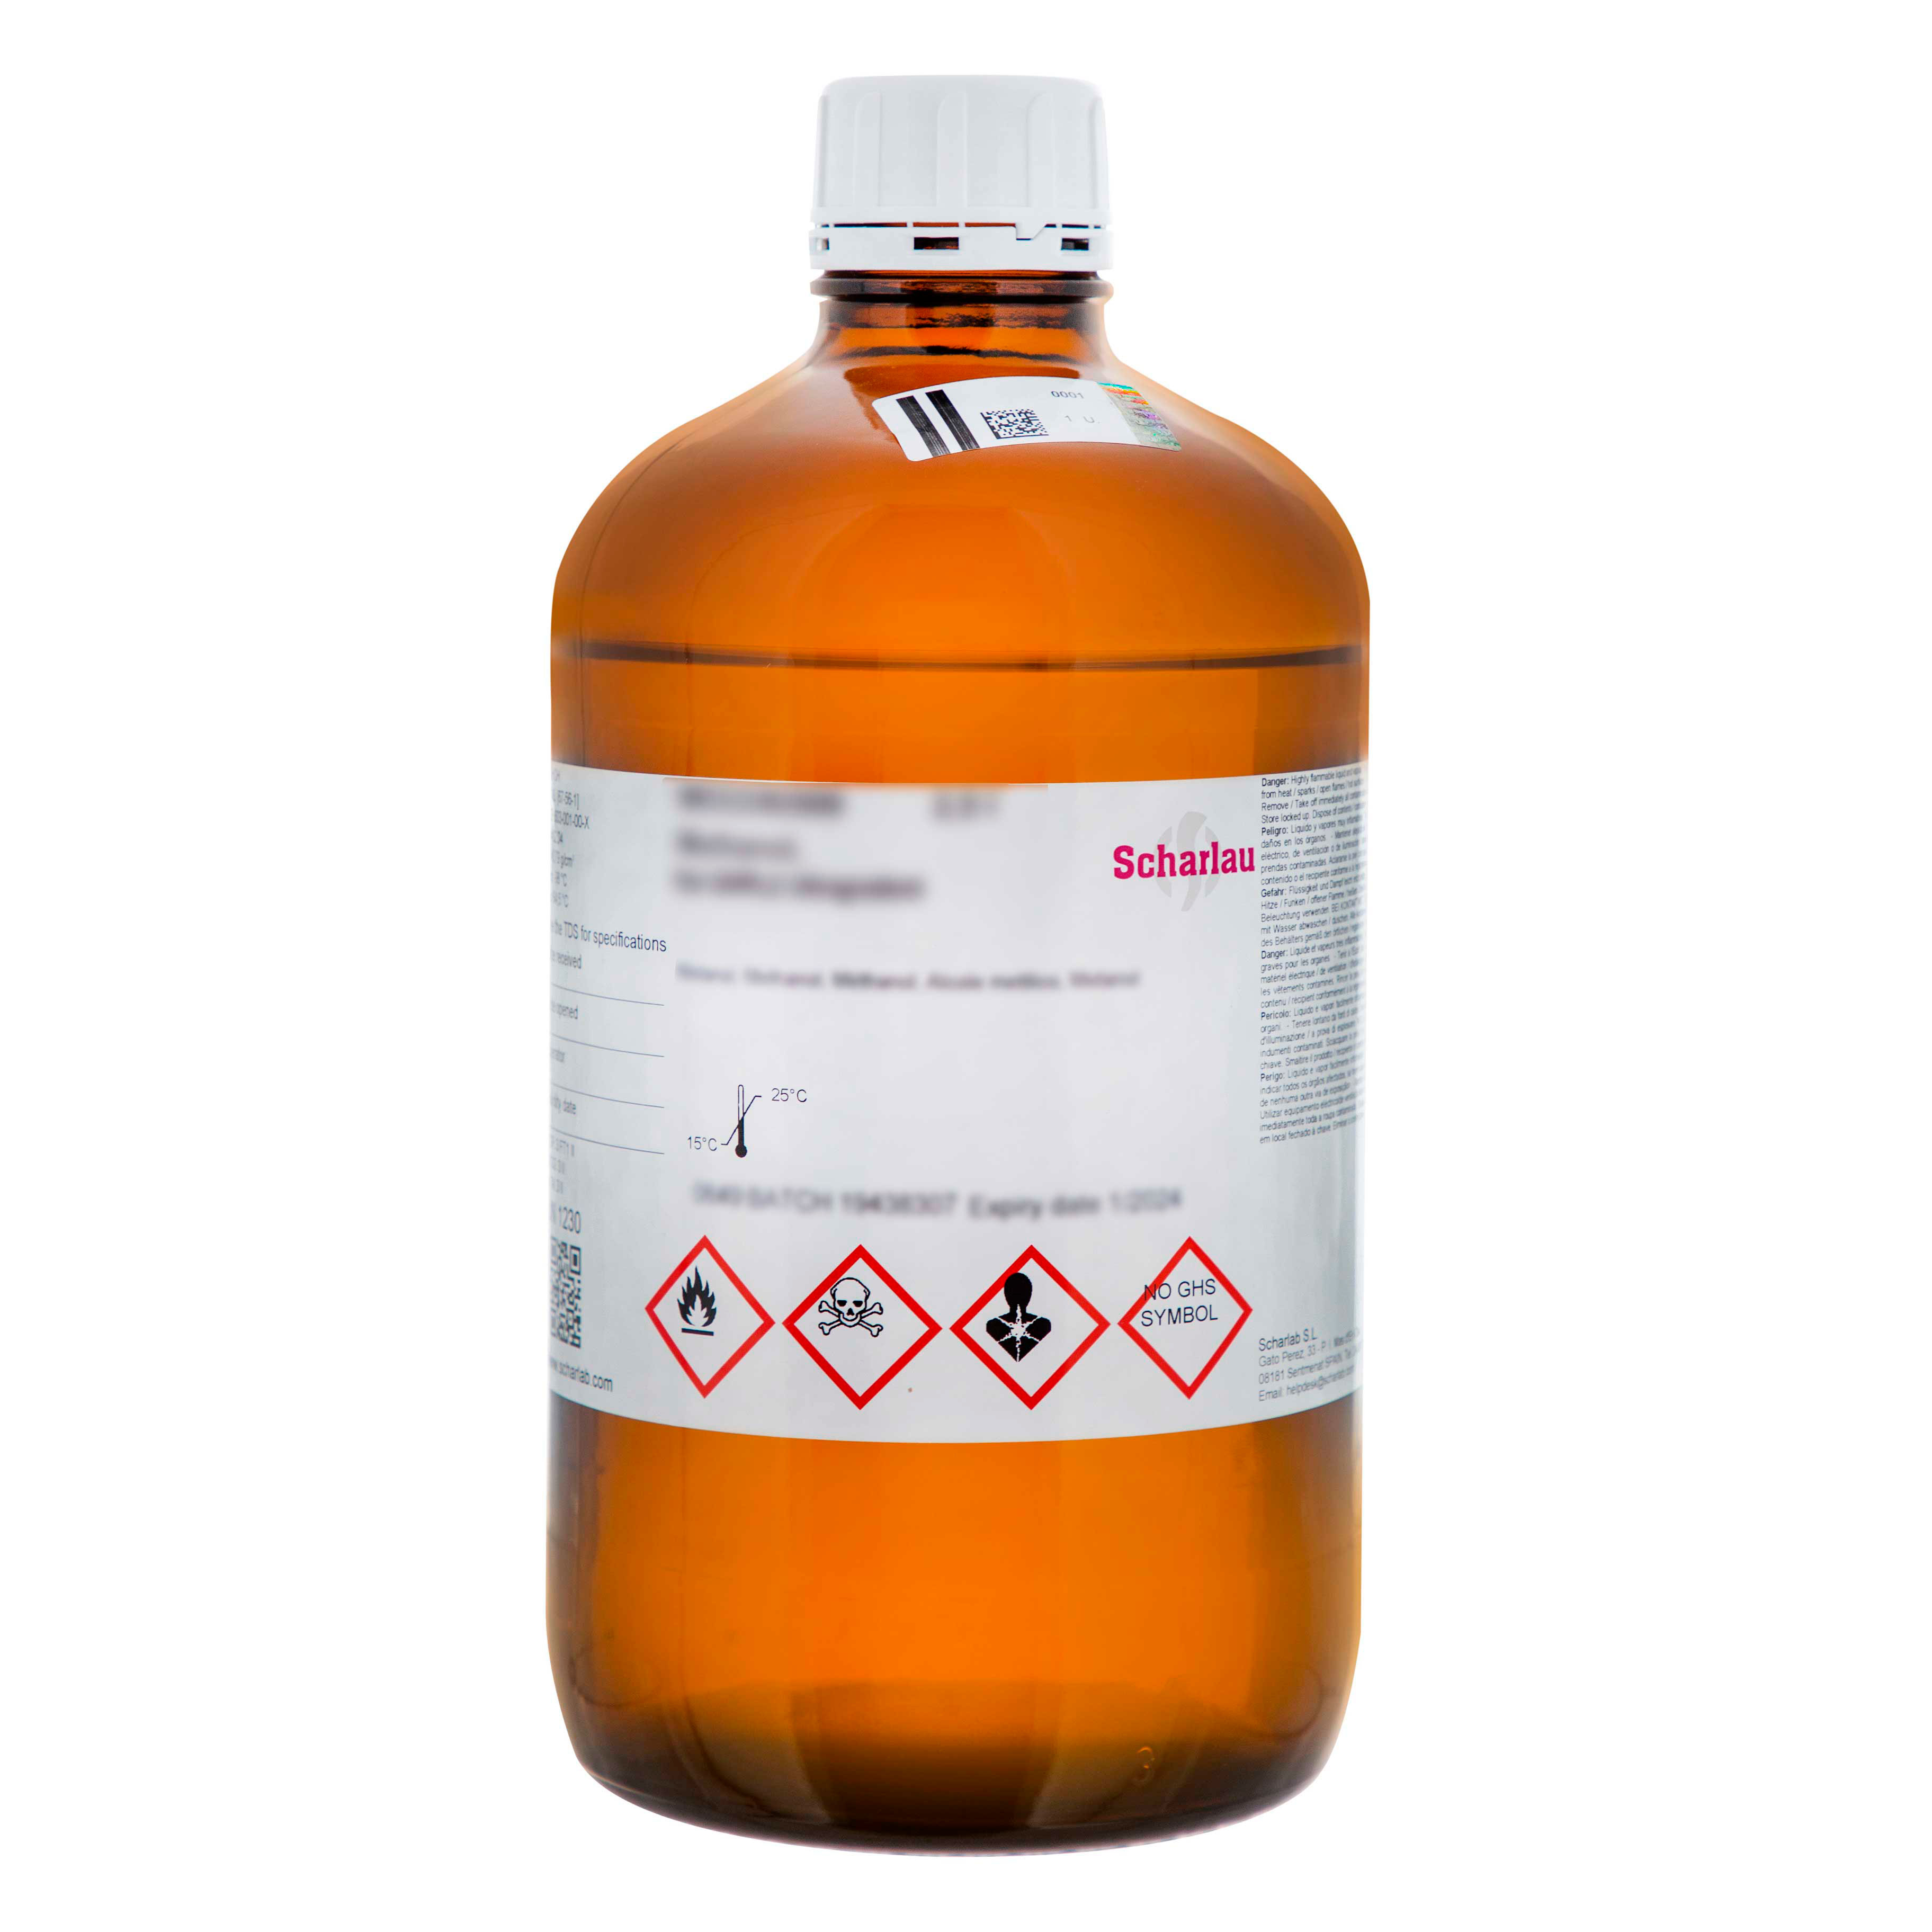 Éter diisopropílico, EssentQ®, estabilizado con aprox. 10 ppm de 2,6-Di-terc-butil-4-metilfenol (BHT)